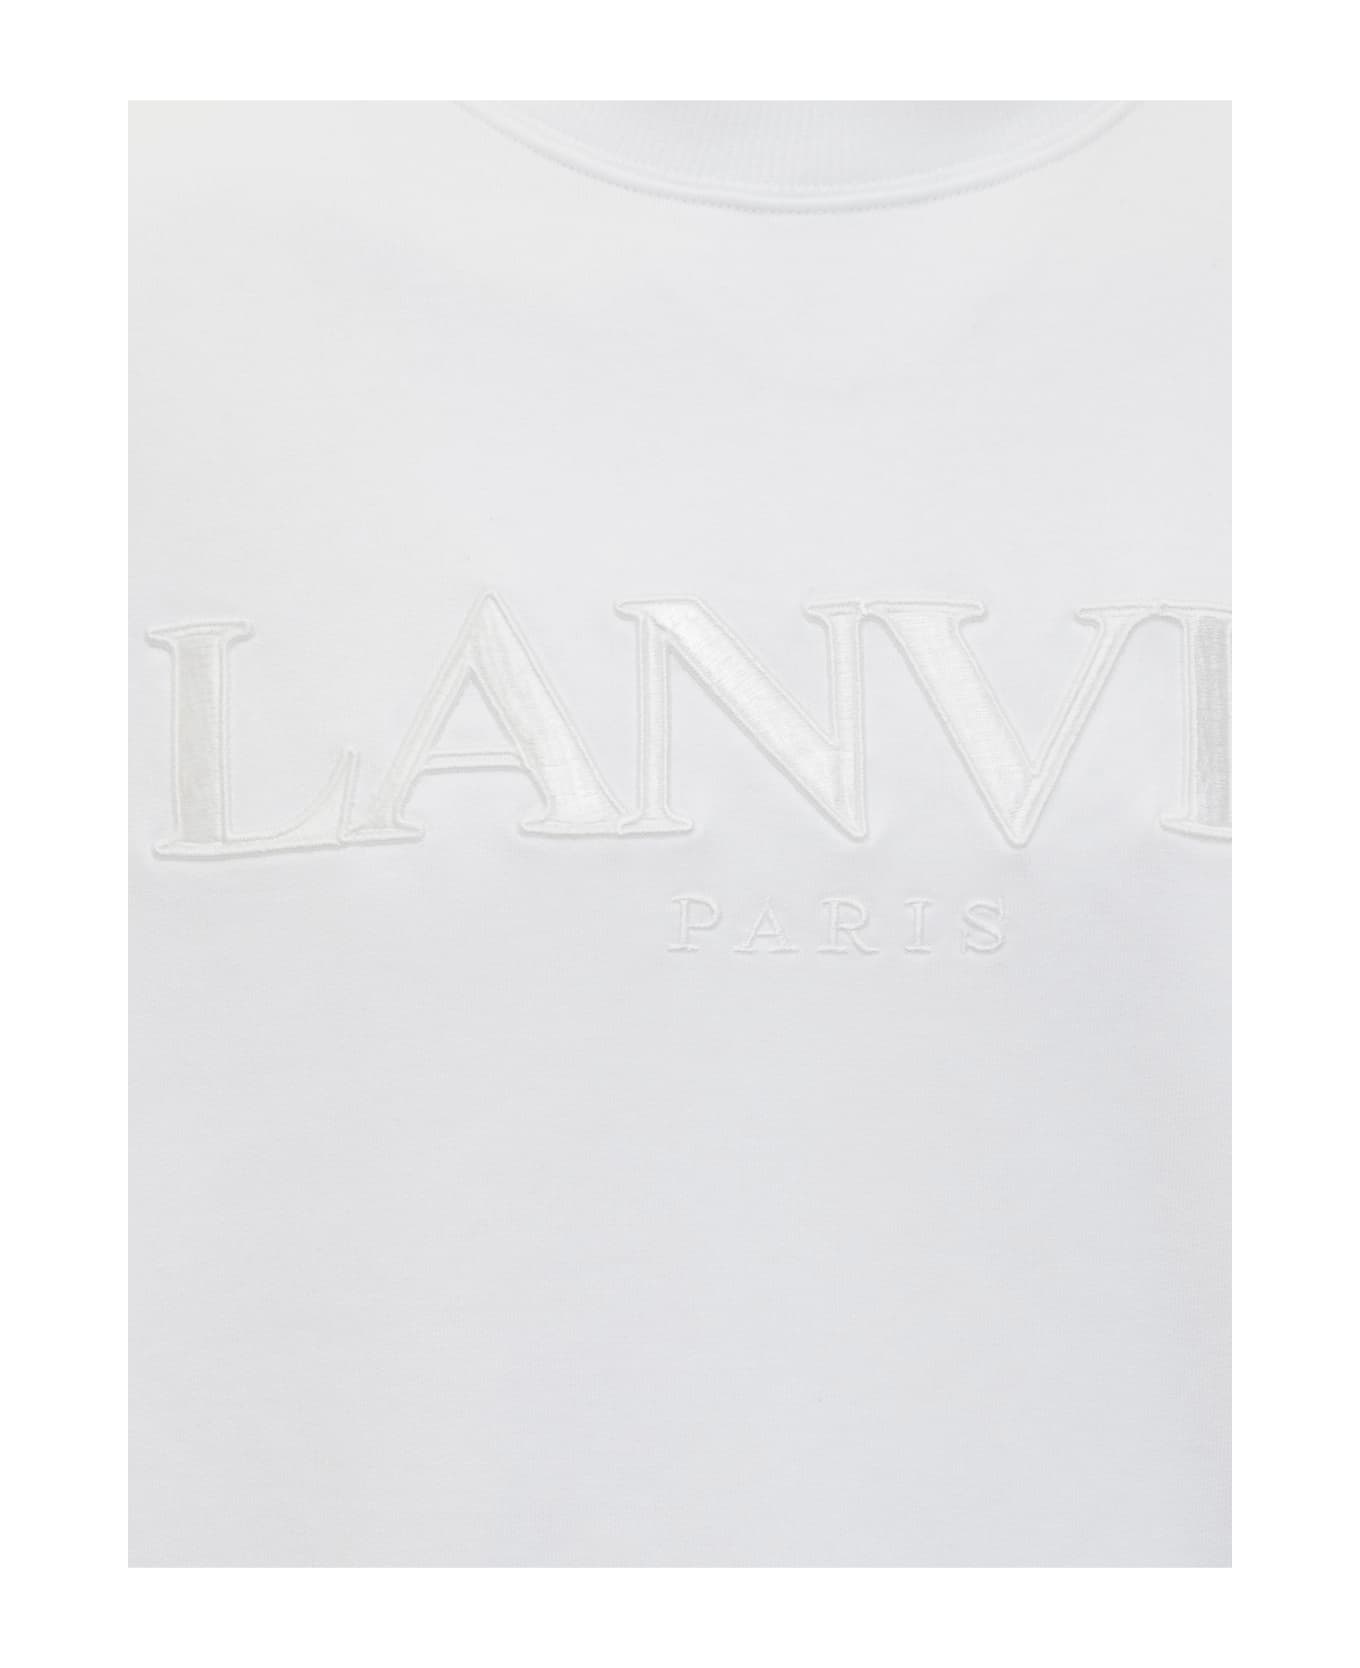 Lanvin Sweatshirt With Logo